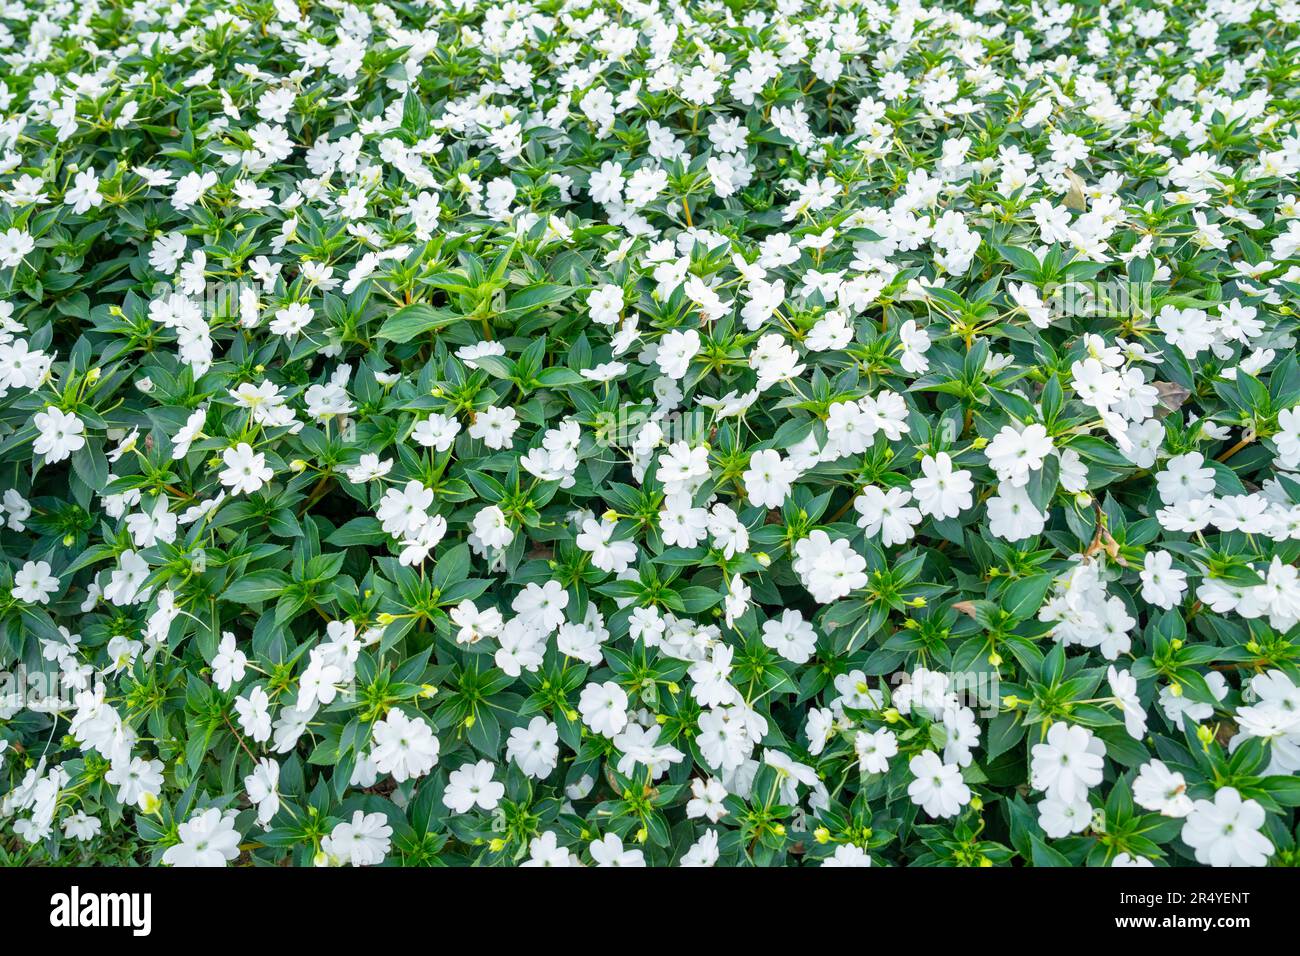 Background of white flowers Impatiens Walleriana : Lizzie in the garden. Stock Photo